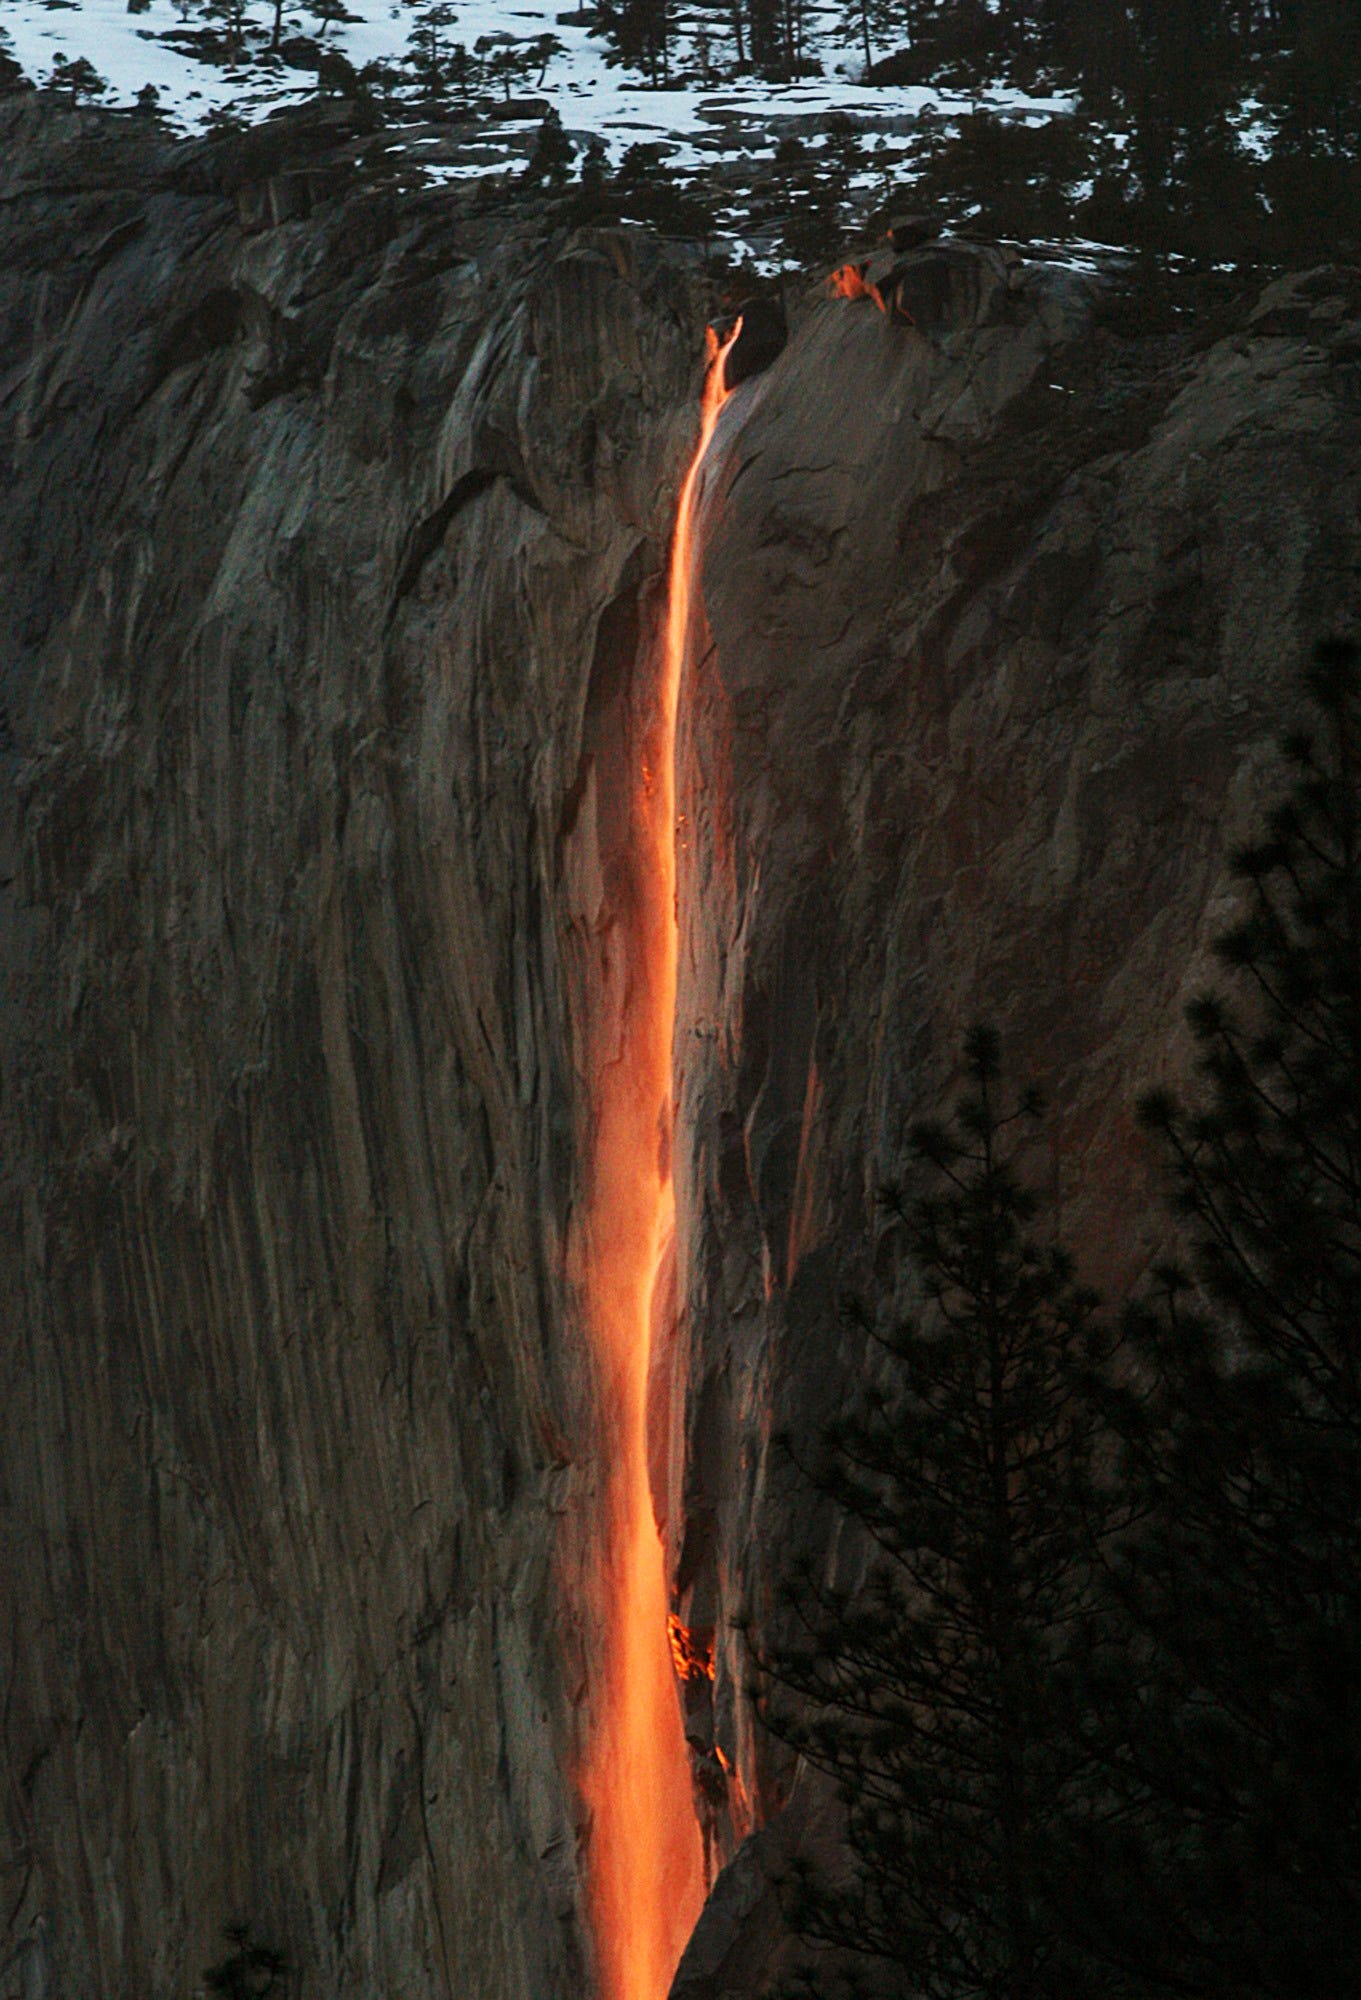 Firefall wows visitors at California’s Yosemite National Park